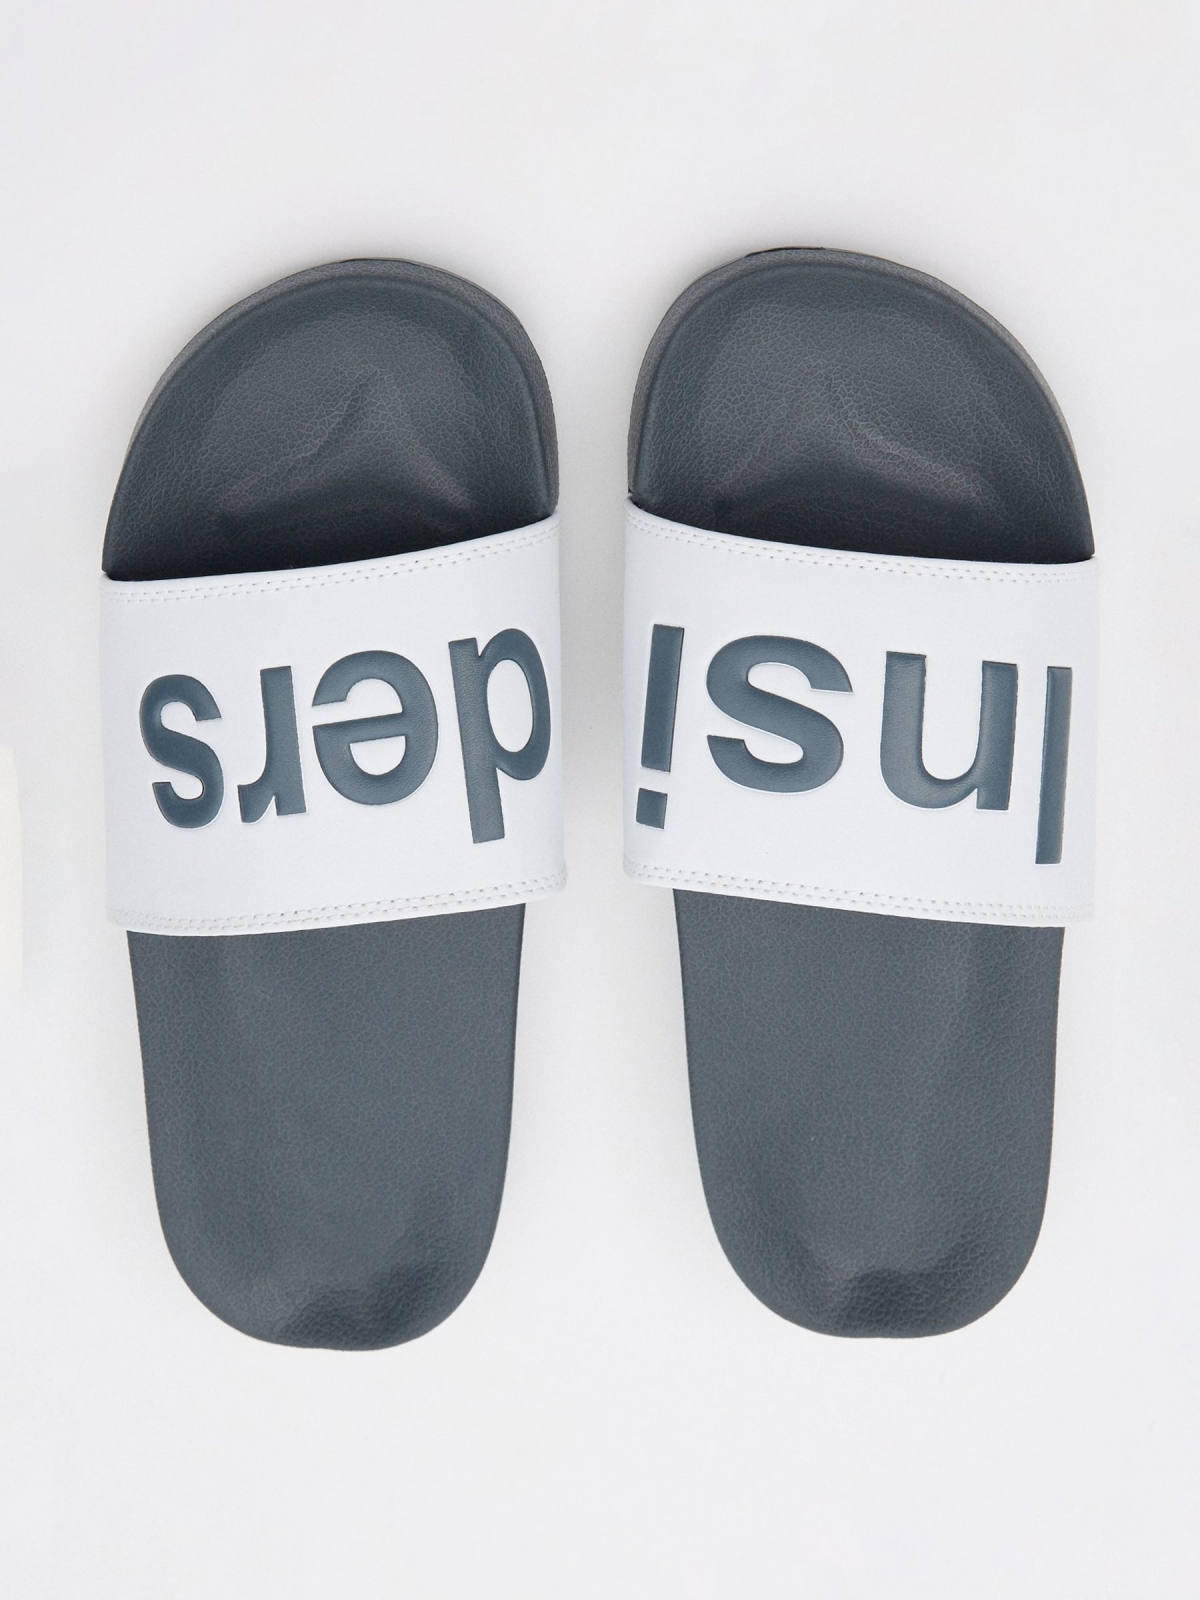 Flip-flops com letras